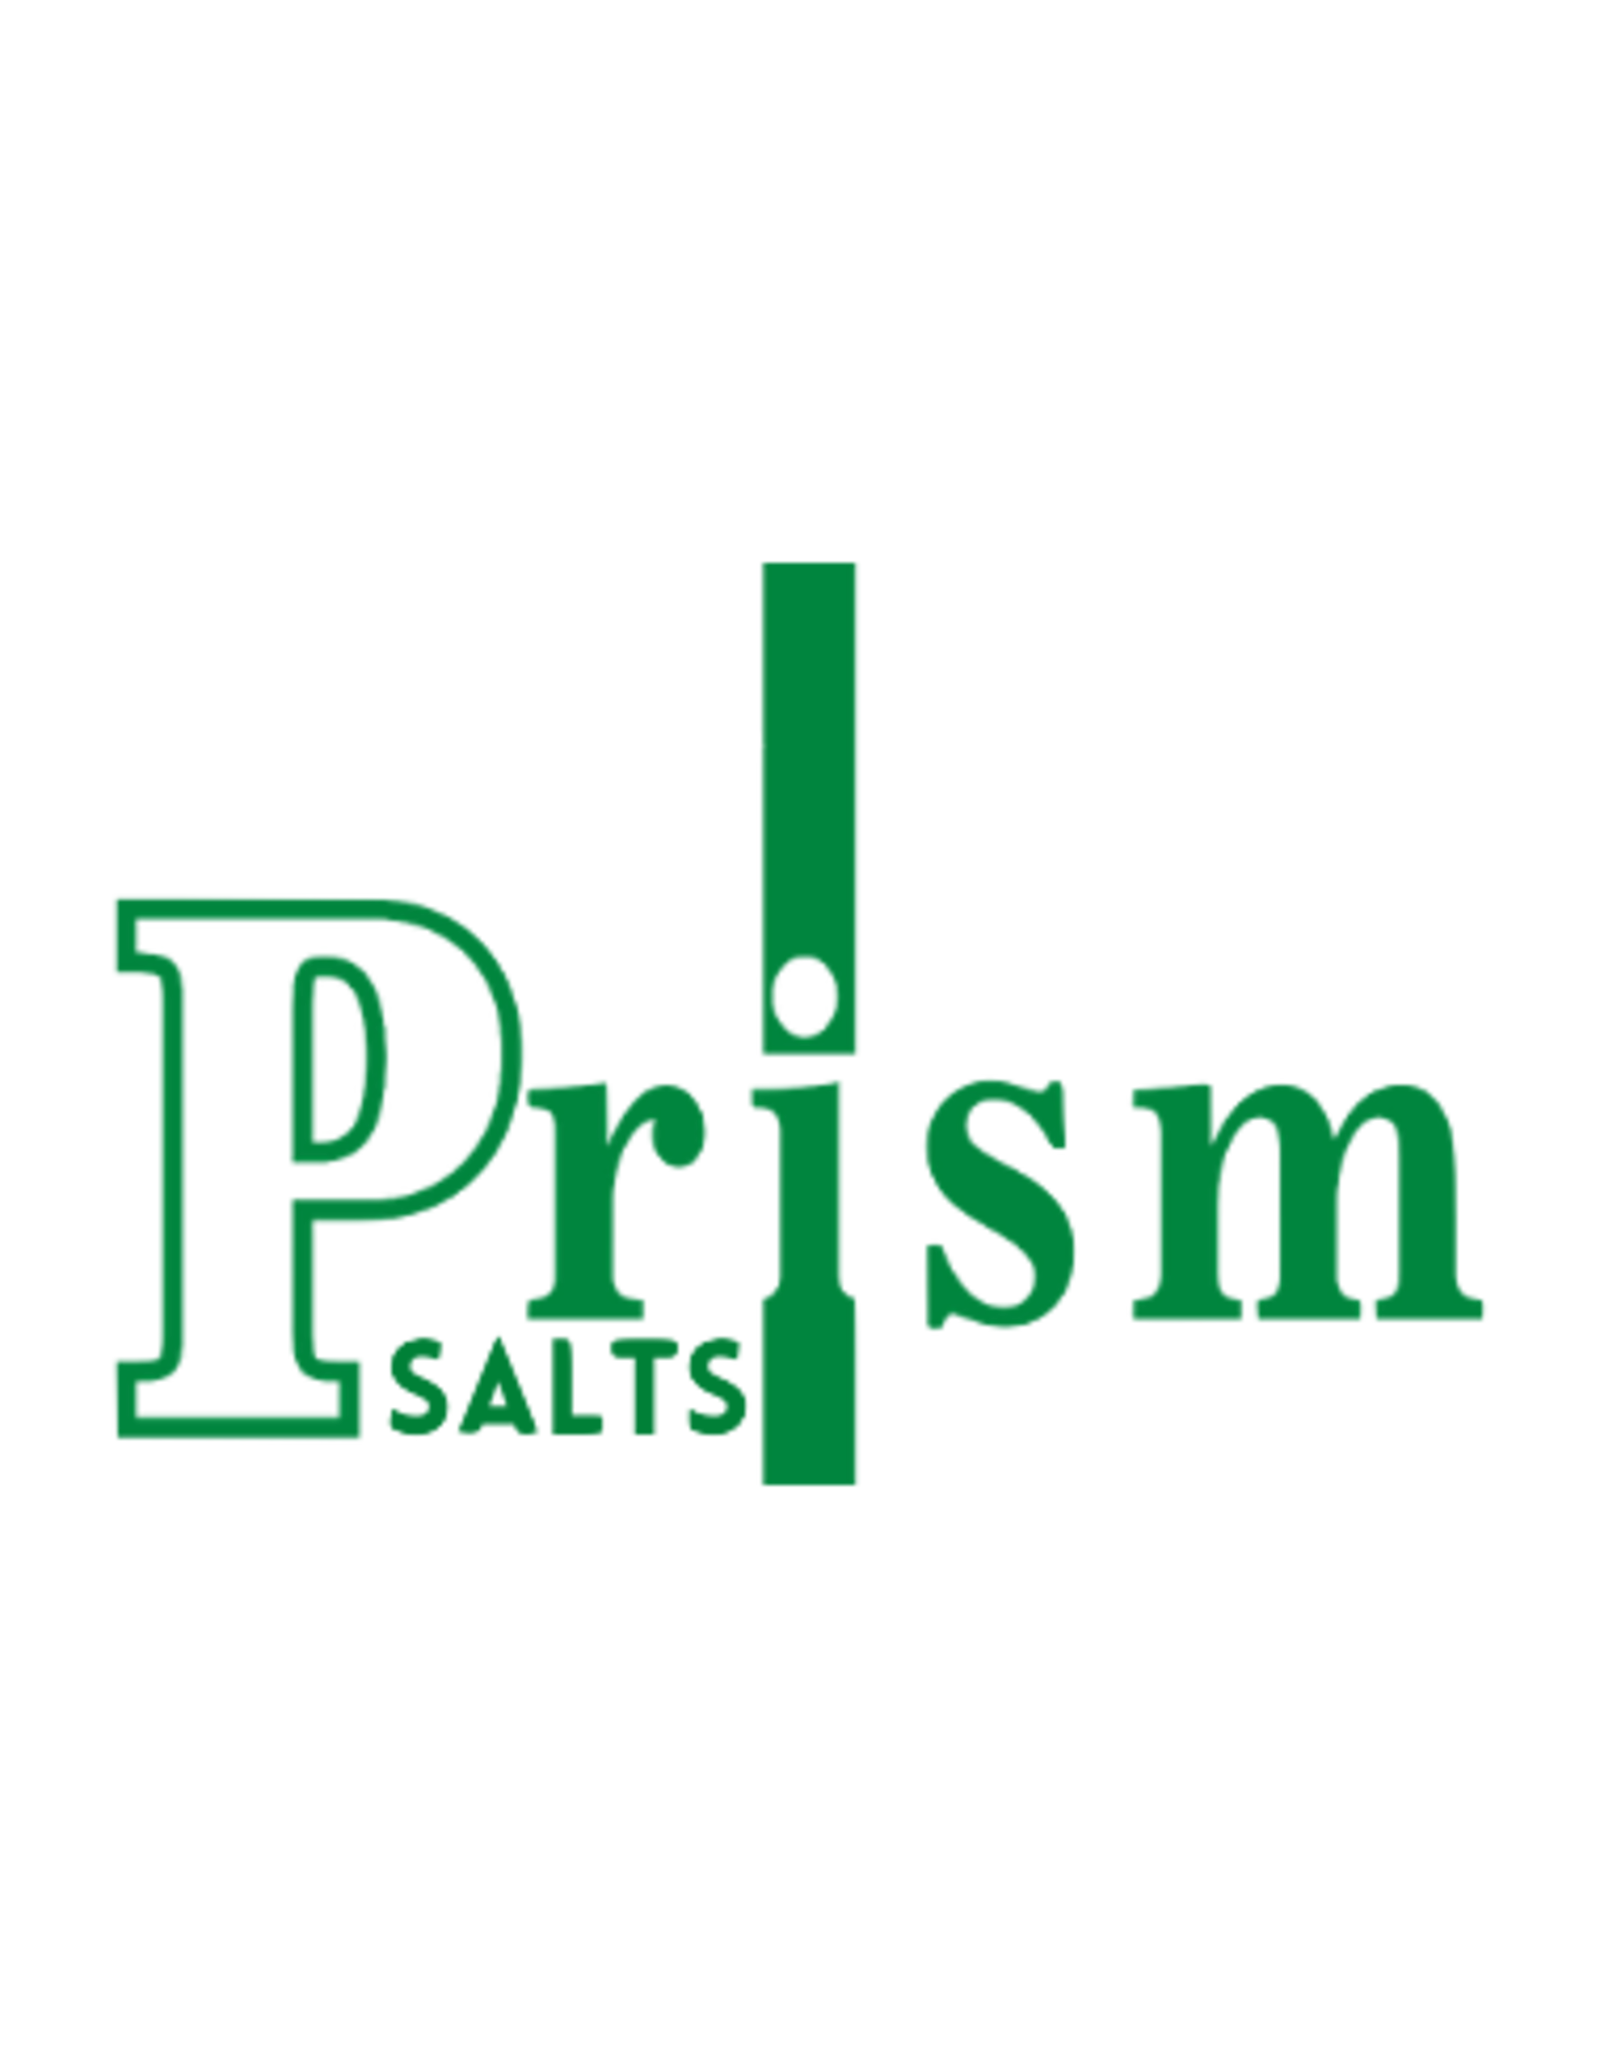 Refined Labs Prism E-juice | Salt Nic (30mL)